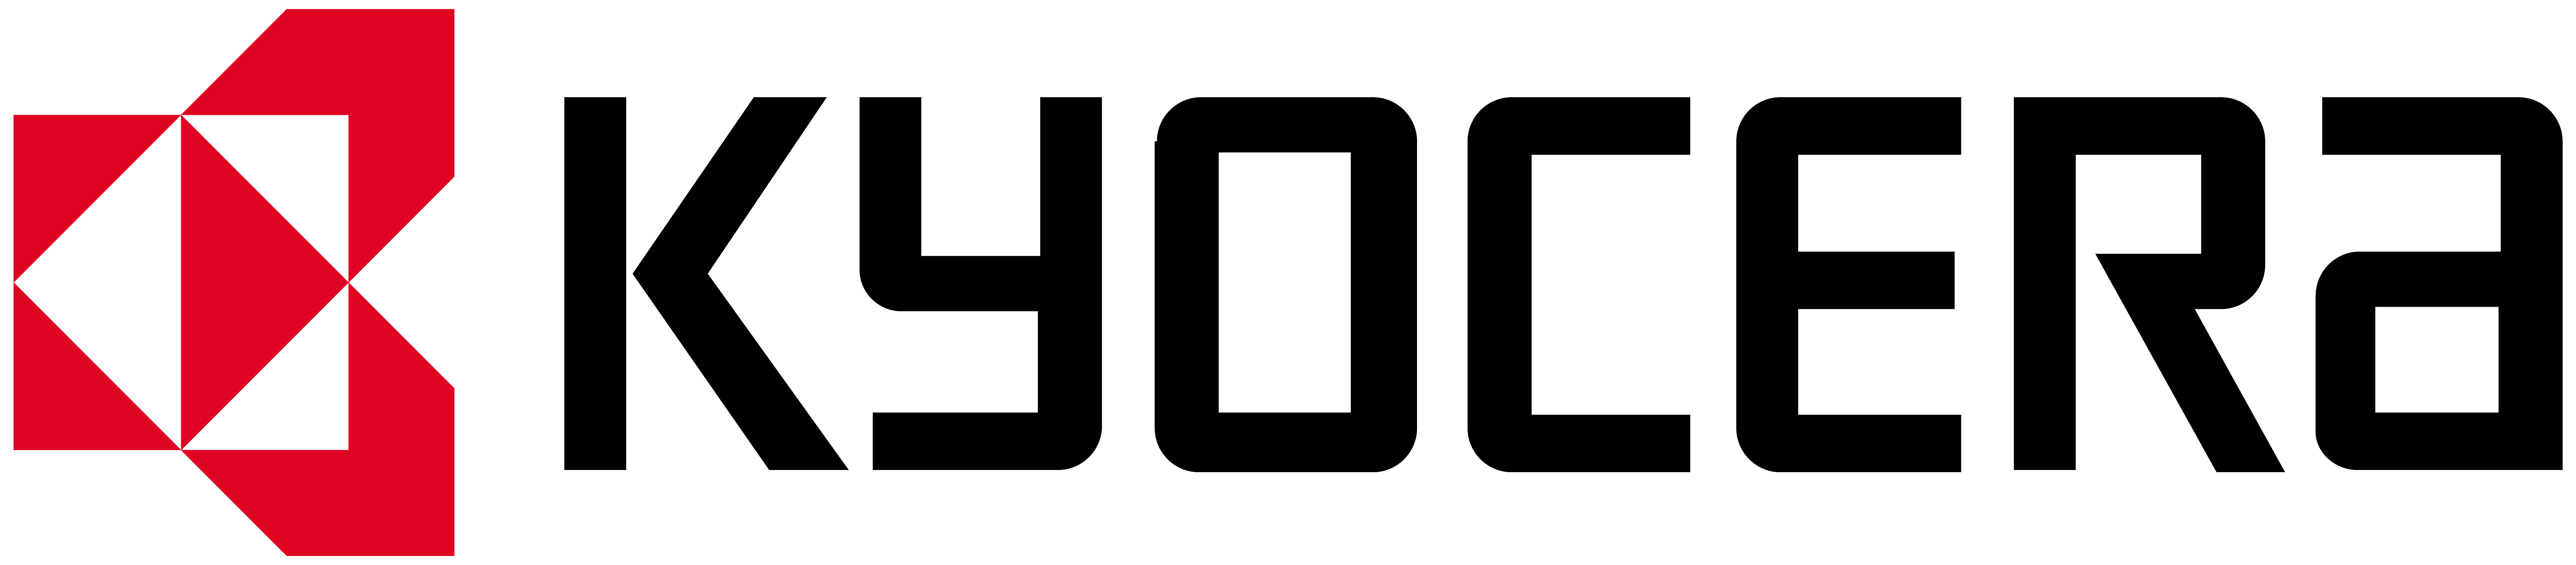 Kyocera logo colors